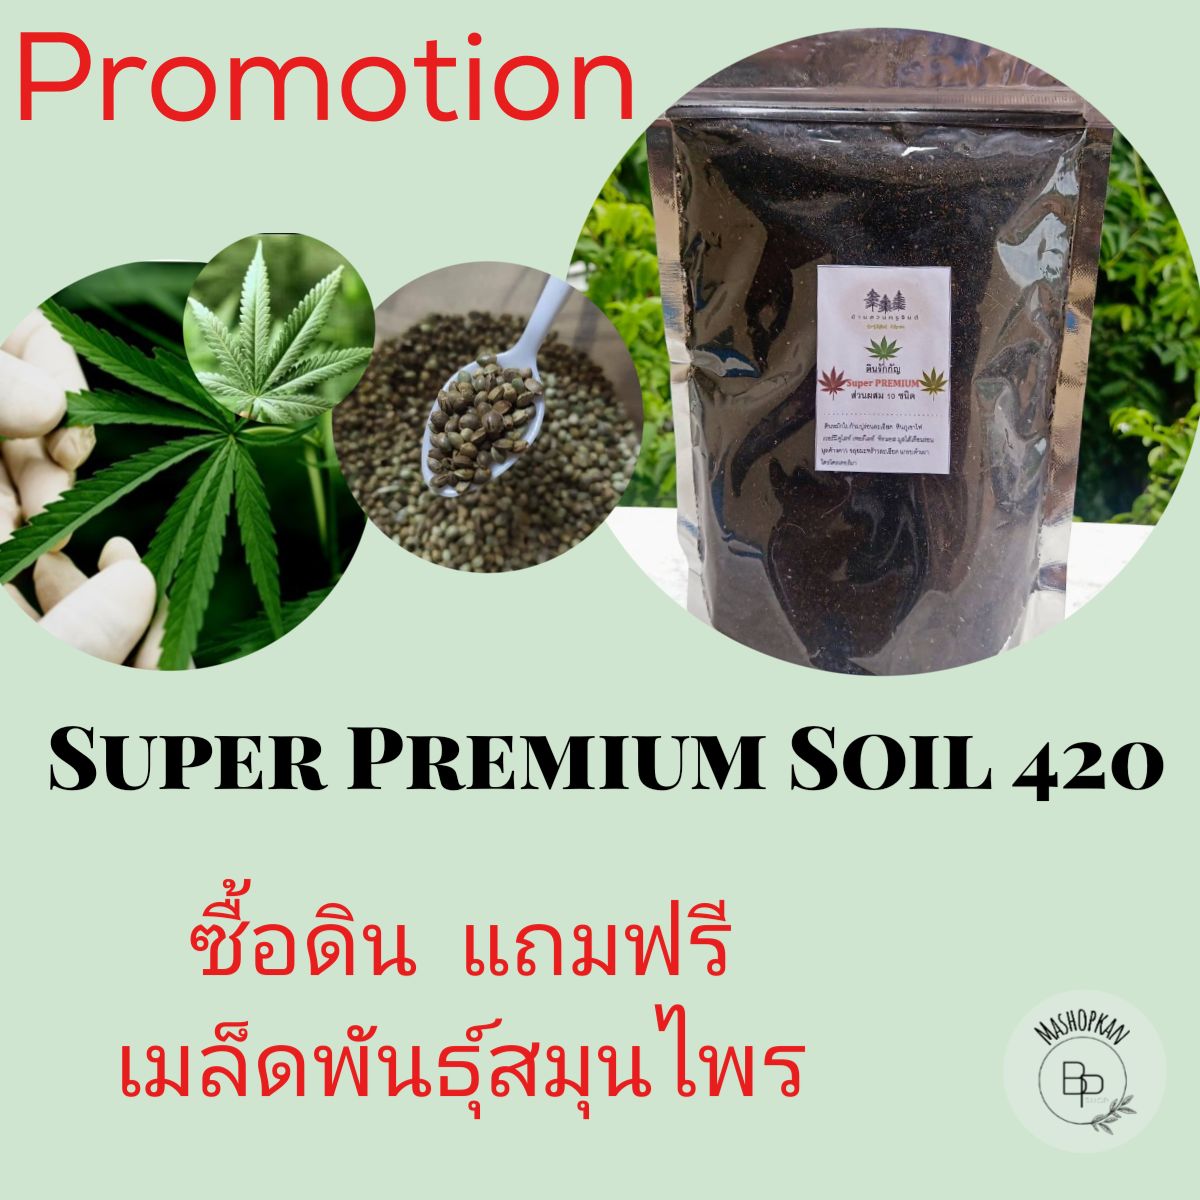 HOT 💥💥 💥 ดินพร้อมปลูกพืชสมุนไพร​ ออแกร์​นิค❗ขายดินแถมเมล็ด​พันธุ์​❗❗ดินพร้อมปลูกสมุน​ไพร💥ดินรักกัญ 💥 Super Premium Soil 420 💥 ออแกร์นิคแท้ 💯% ดินปลูกสมุน​ไพร​สายเขียว   ดินปลูก สมุนไพรไทย